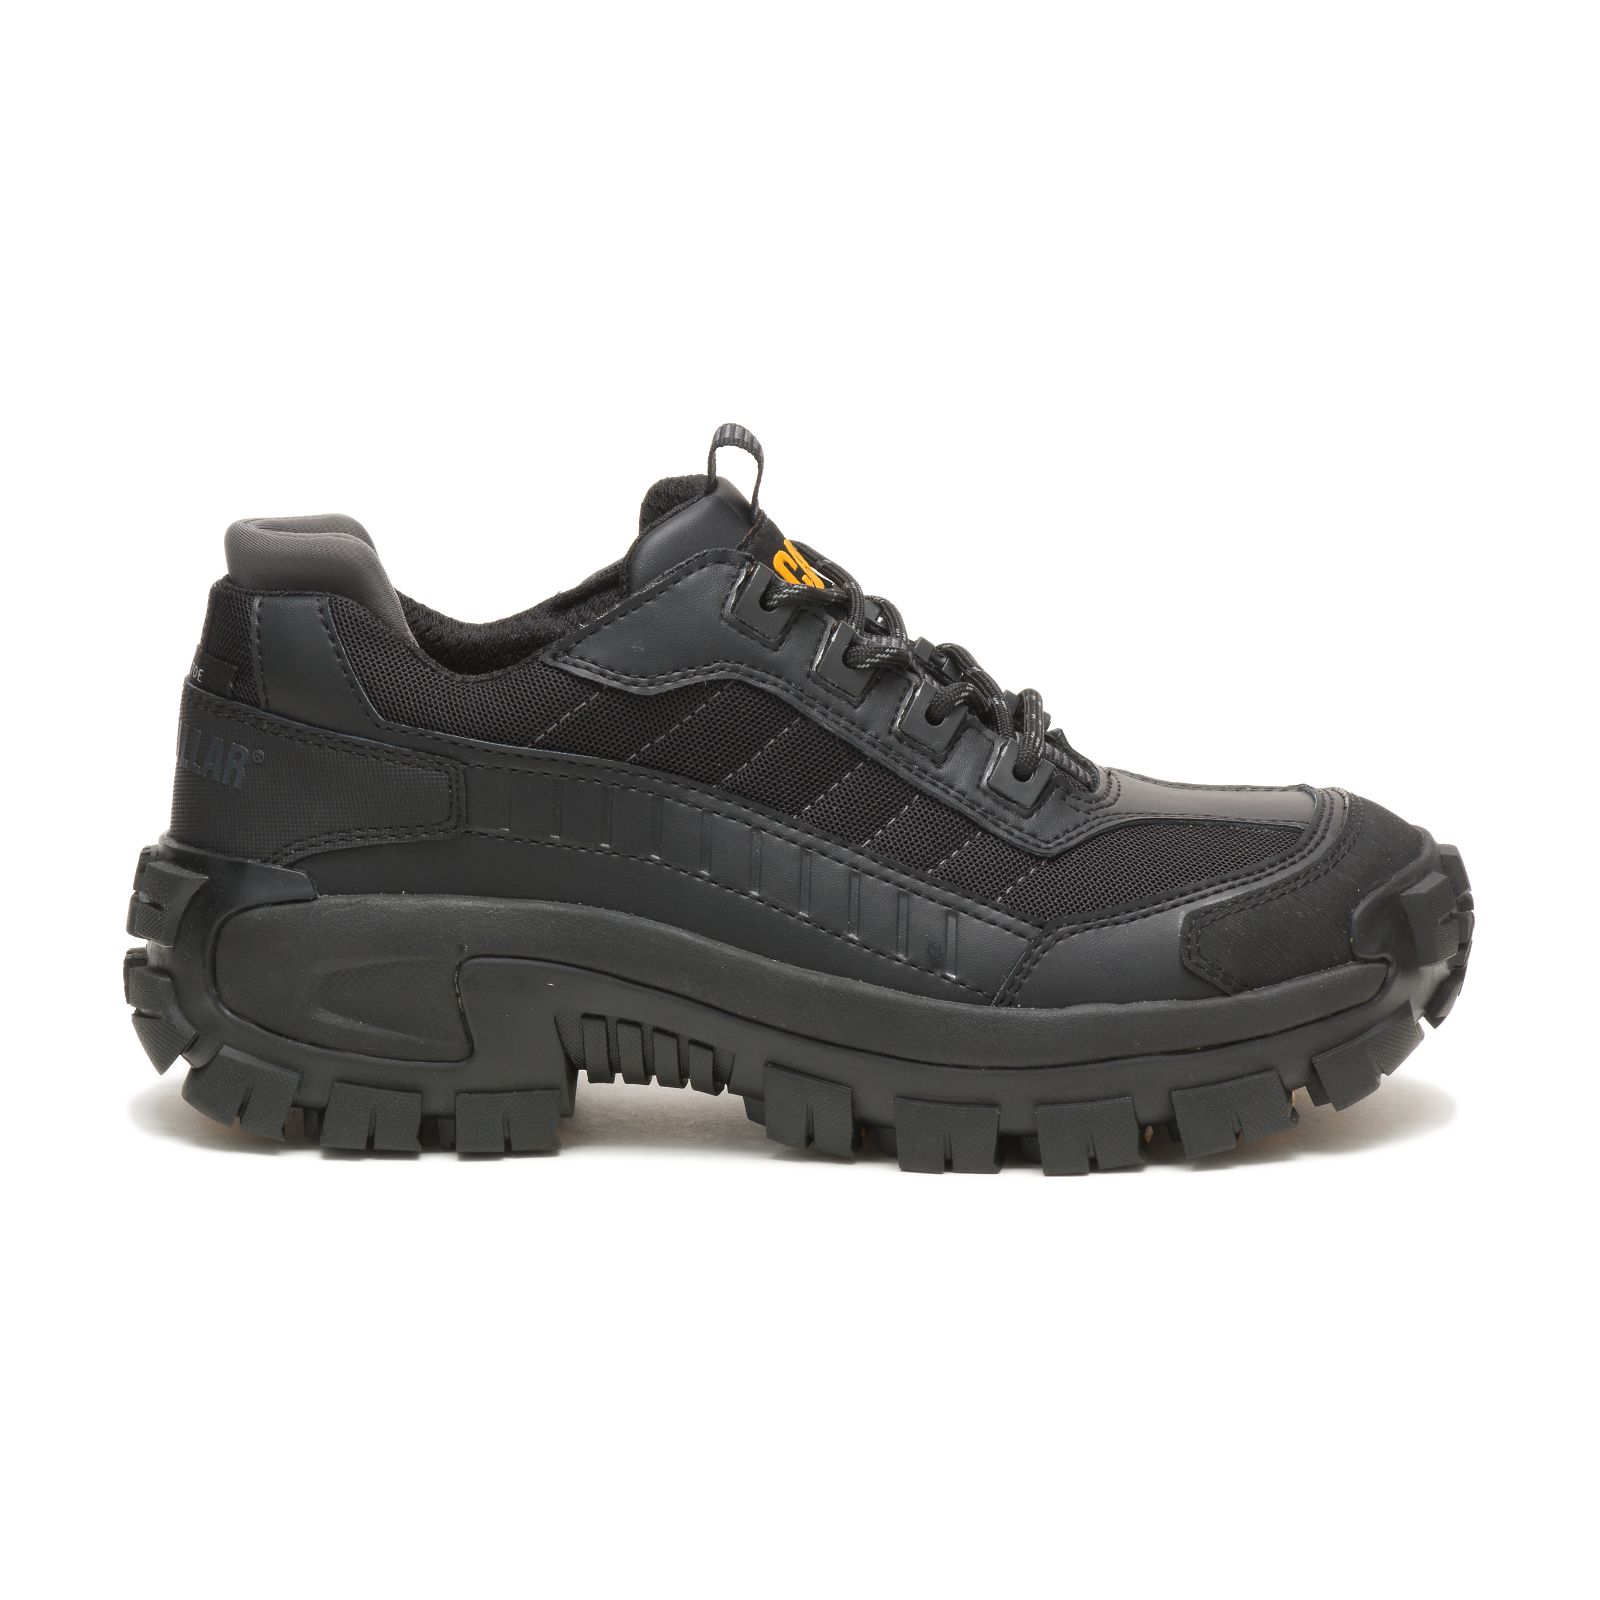 Caterpillar Shoes Online - Caterpillar Invader Steel Toe Mens Work Shoes Black (593176-HWJ)